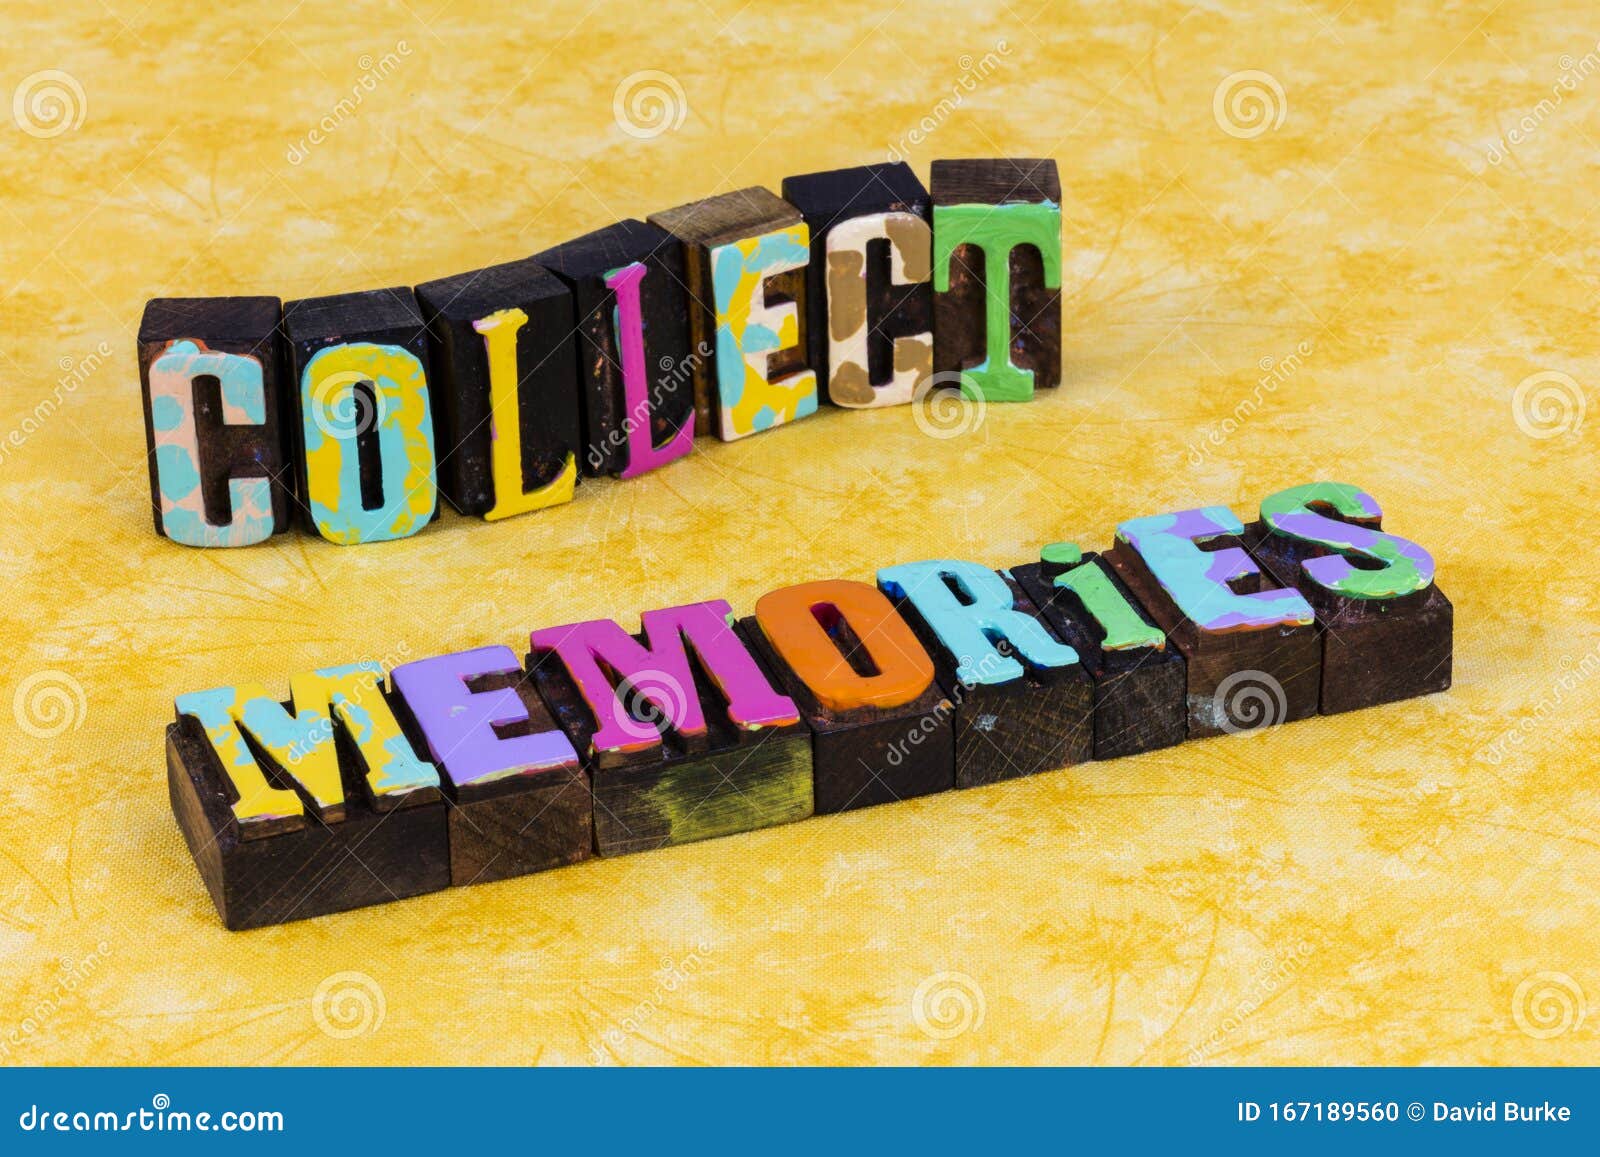 collect memories vintage collection memory lane nostalgia recall bygone time